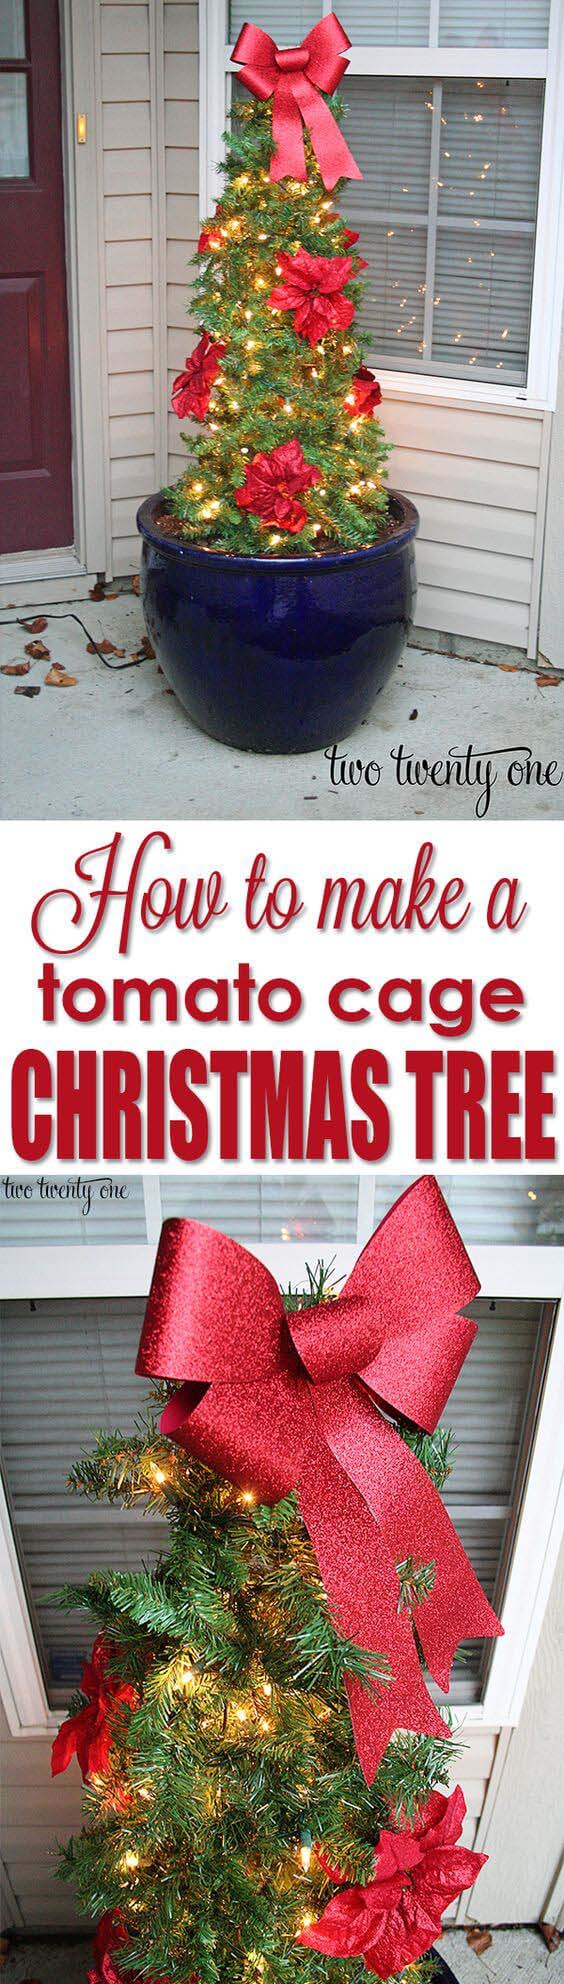 DIY Decorative Tomato Cage Christmas Tree #Christmastree #outdoor #decorhomeideas